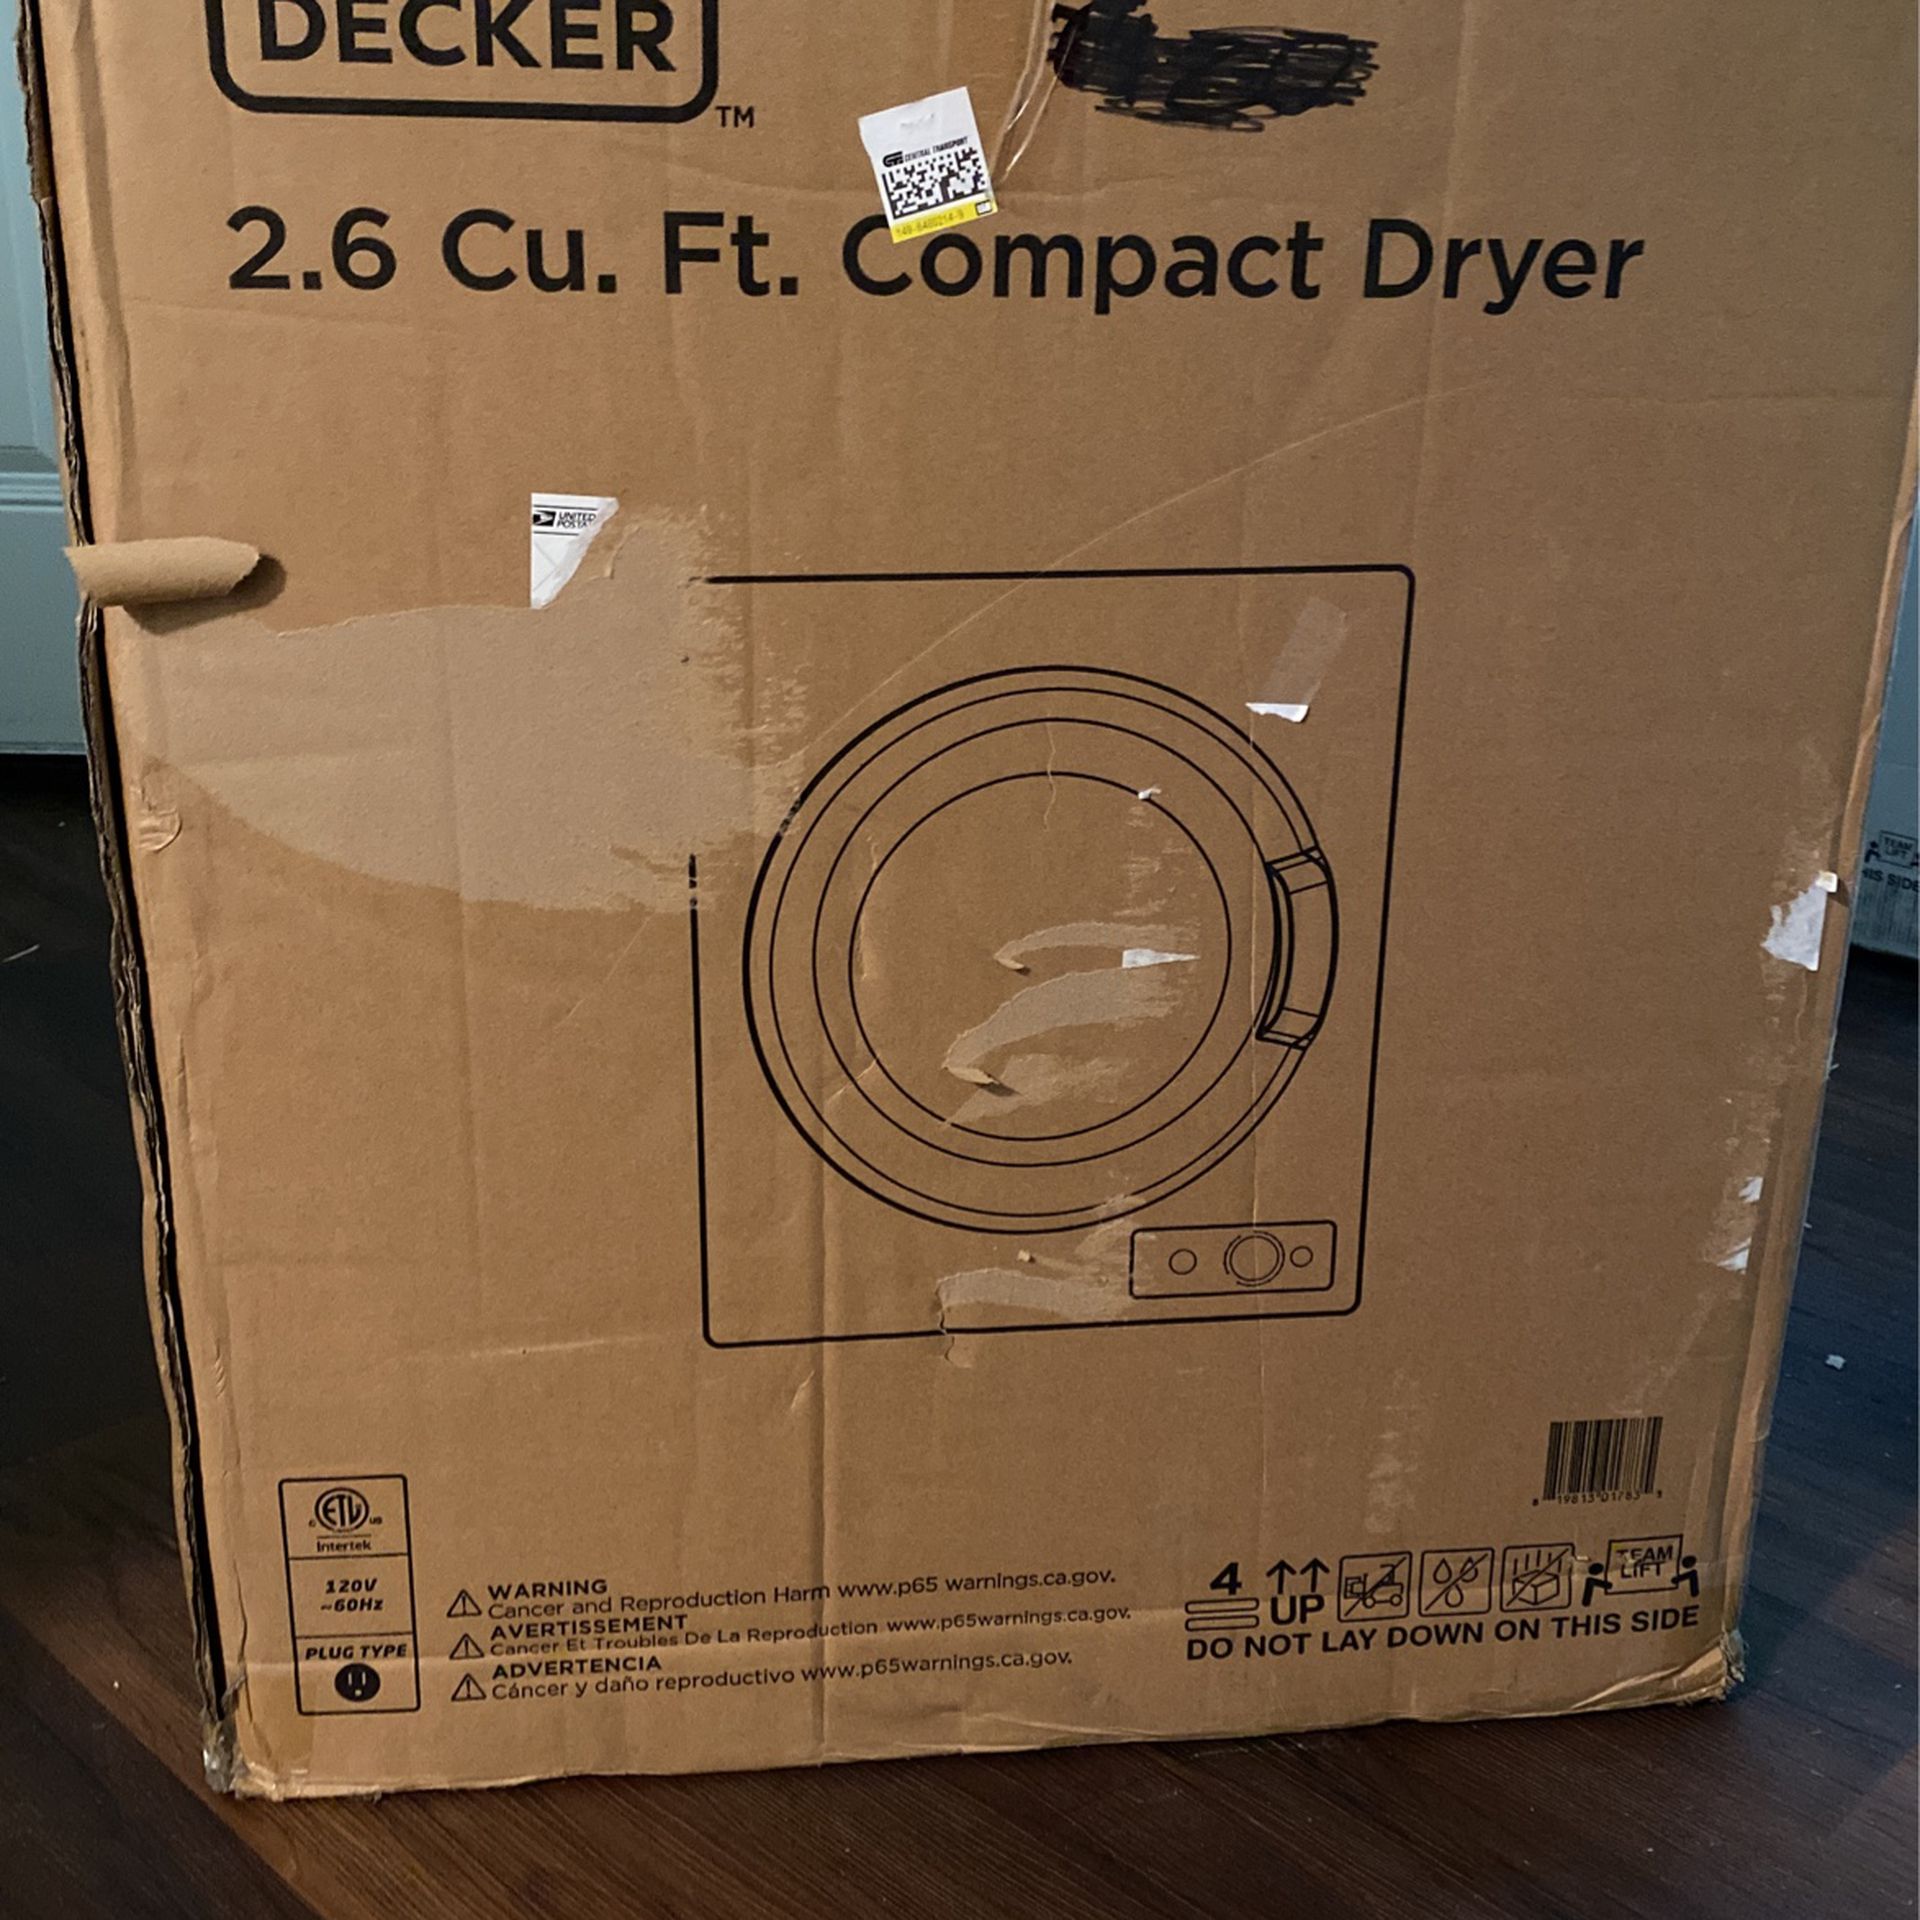 BLACK+DECKER 2.65 cu. ft. Capacity White Electric Dryer BCED26